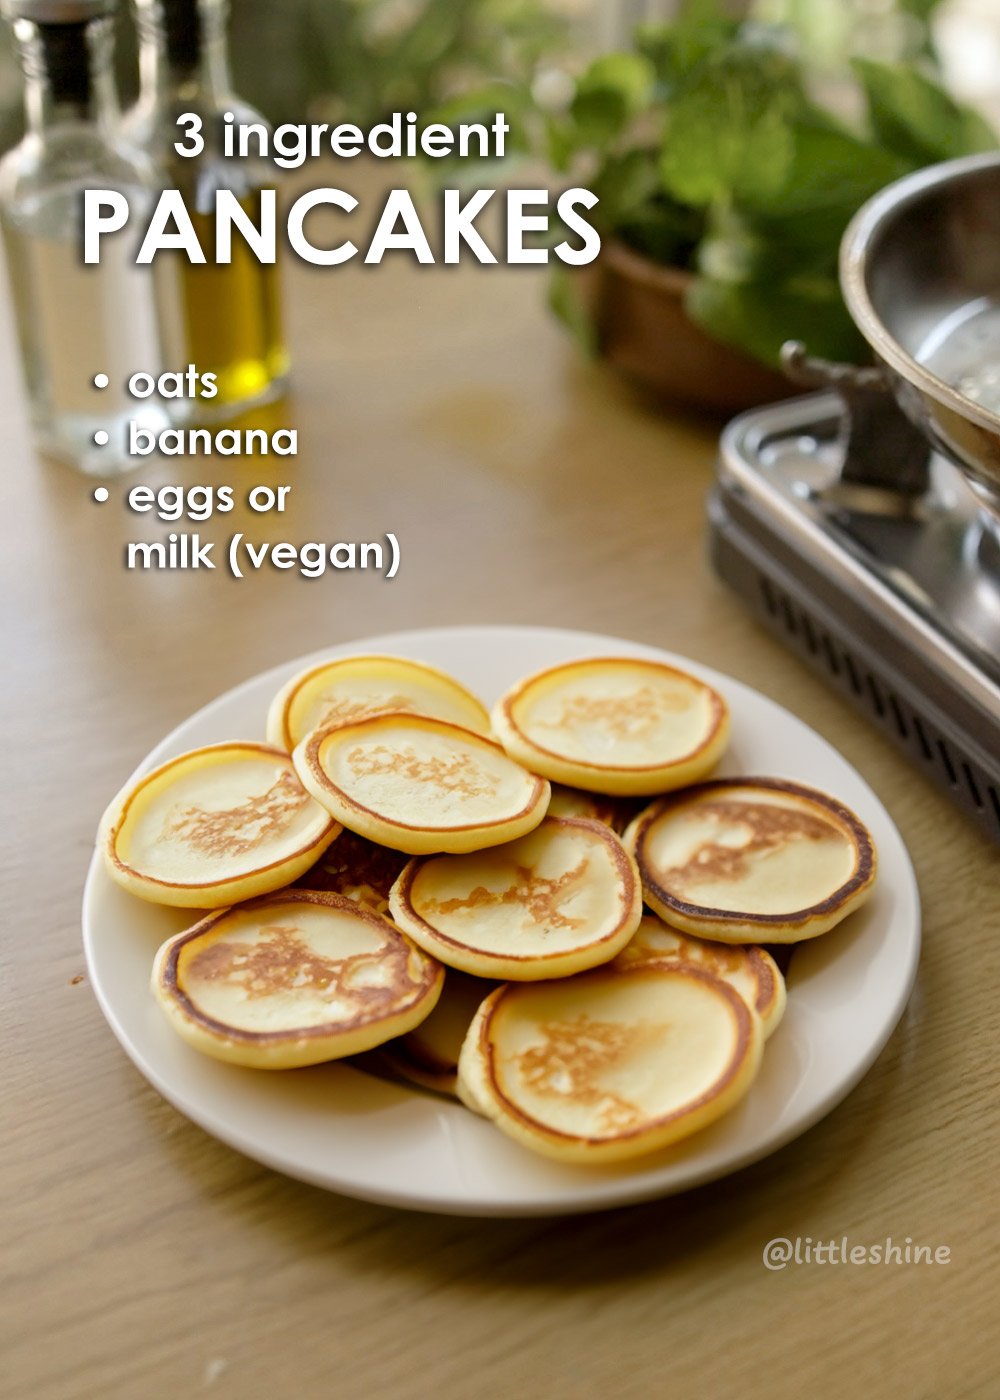  Oats Pancakes - 3 ingredients 